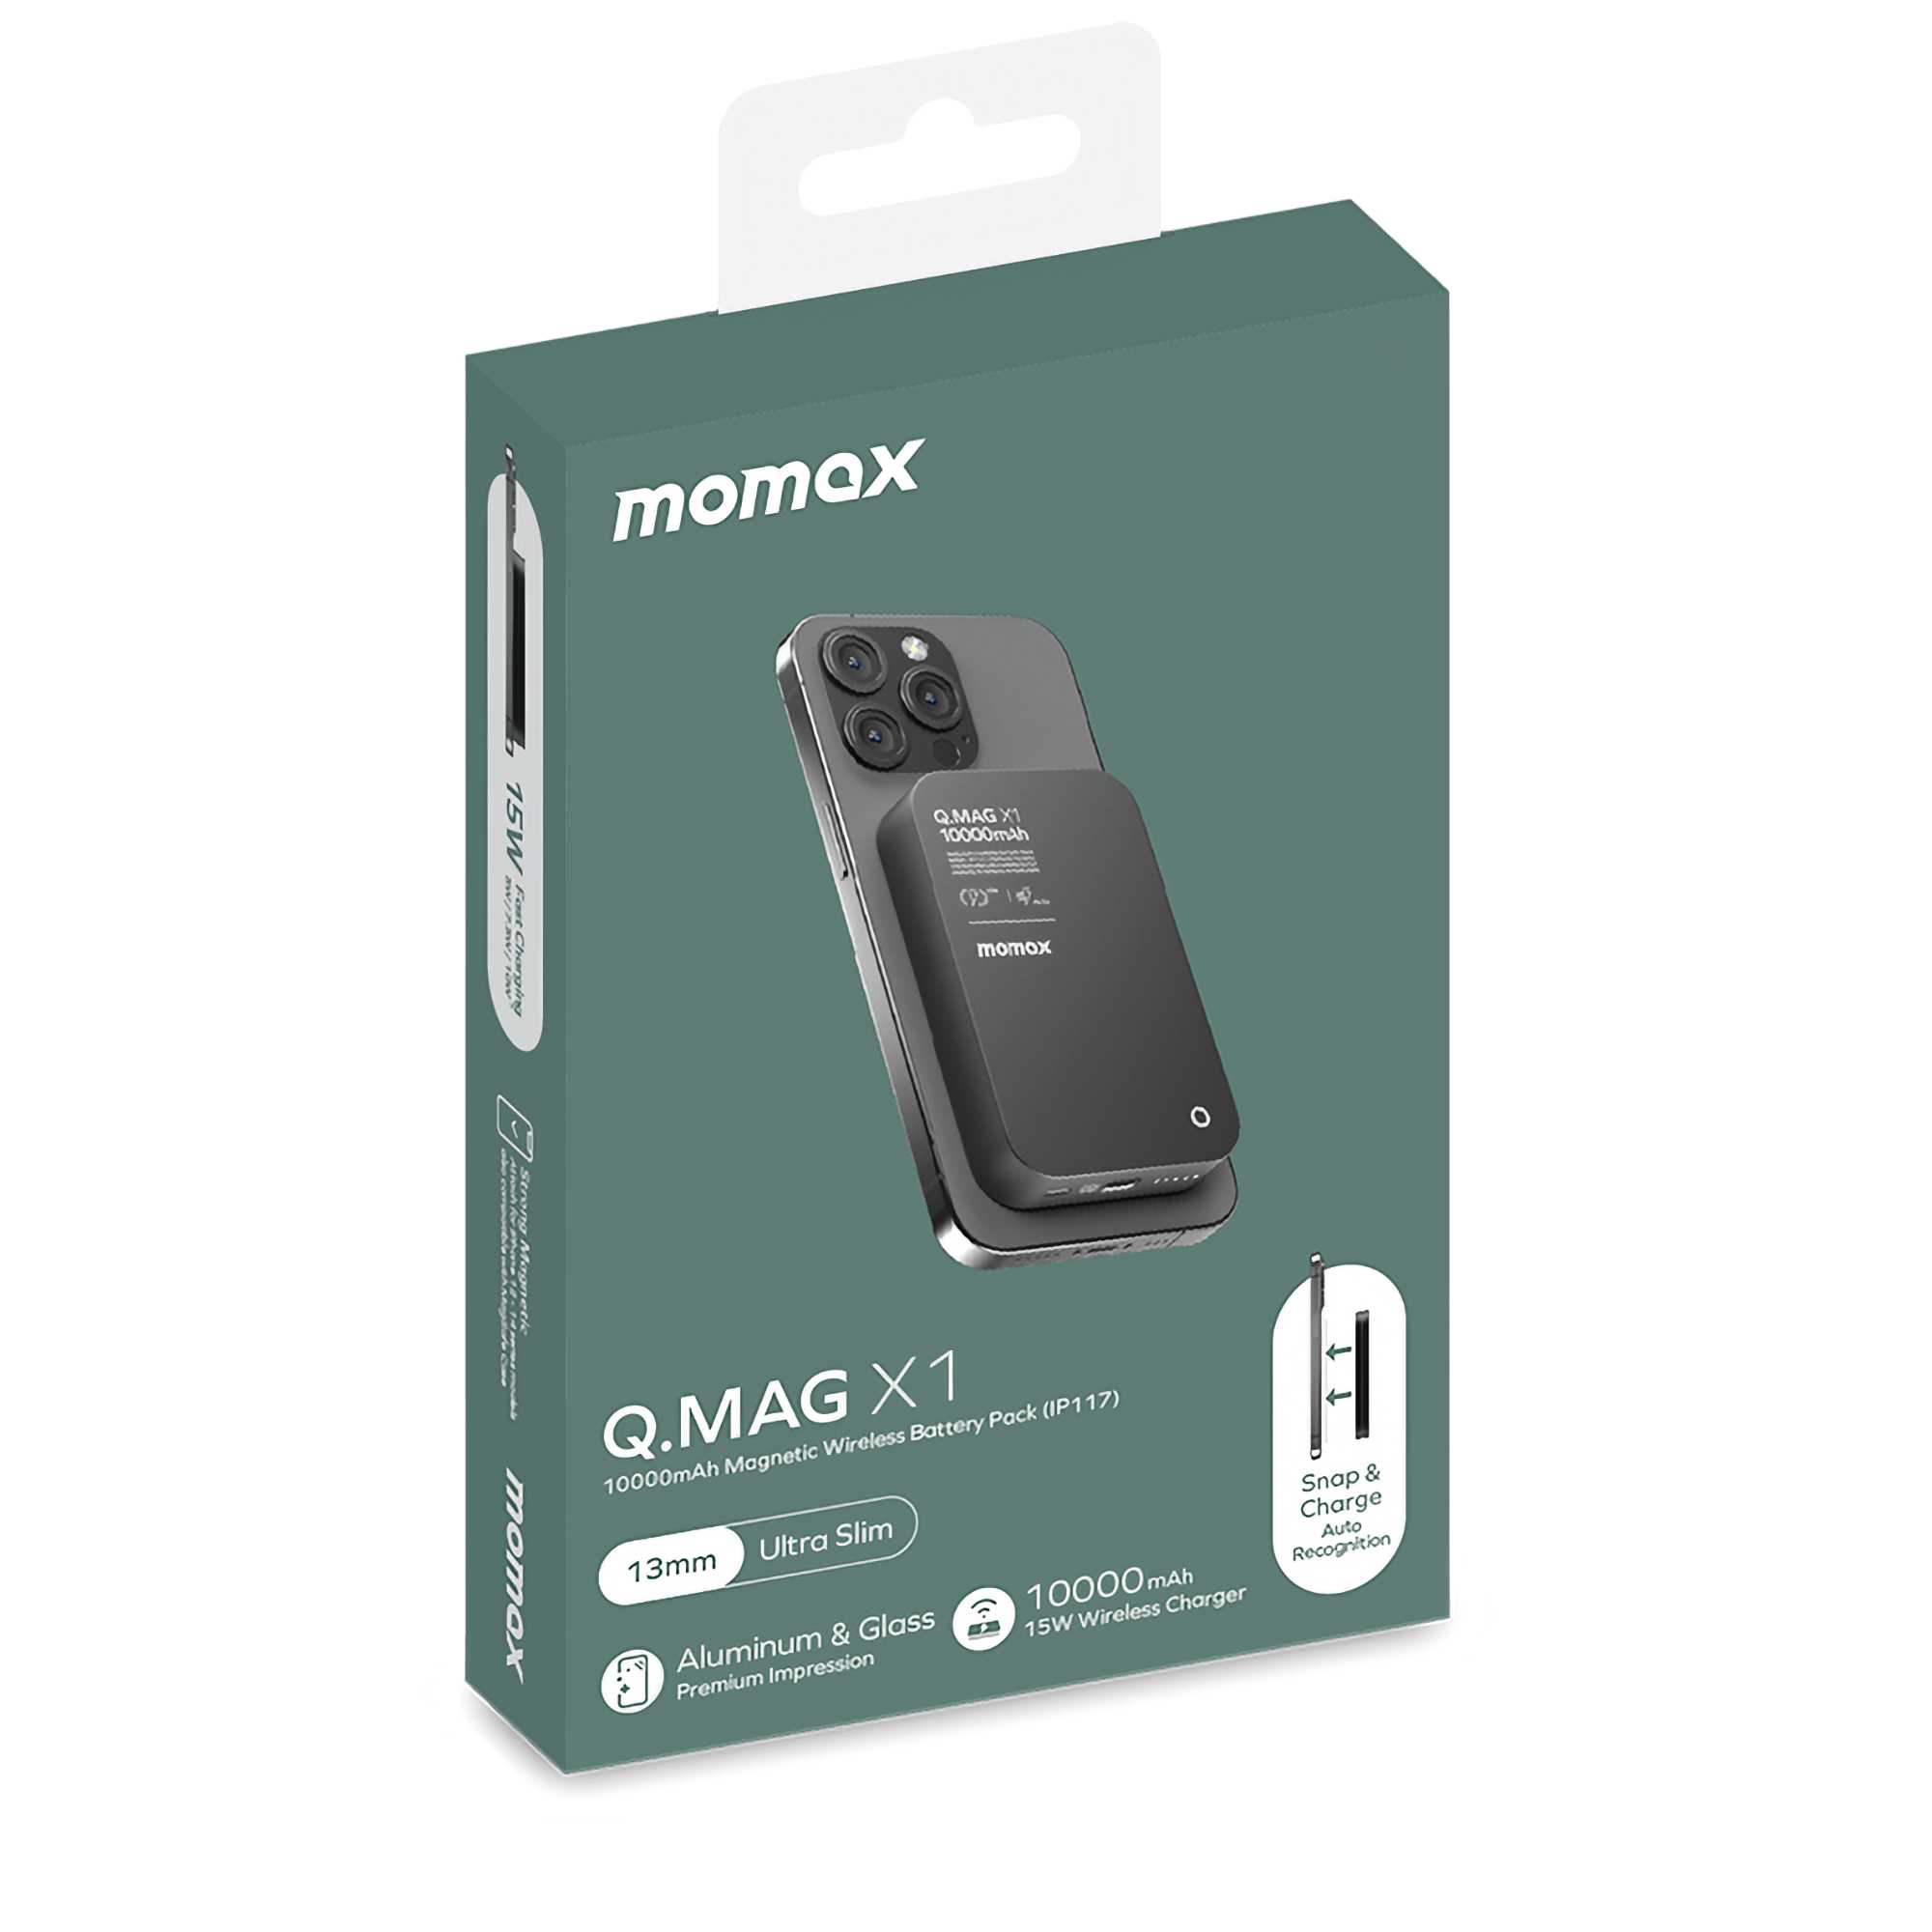 Q.Mag X1 10000mAh Wireless Battery Pack